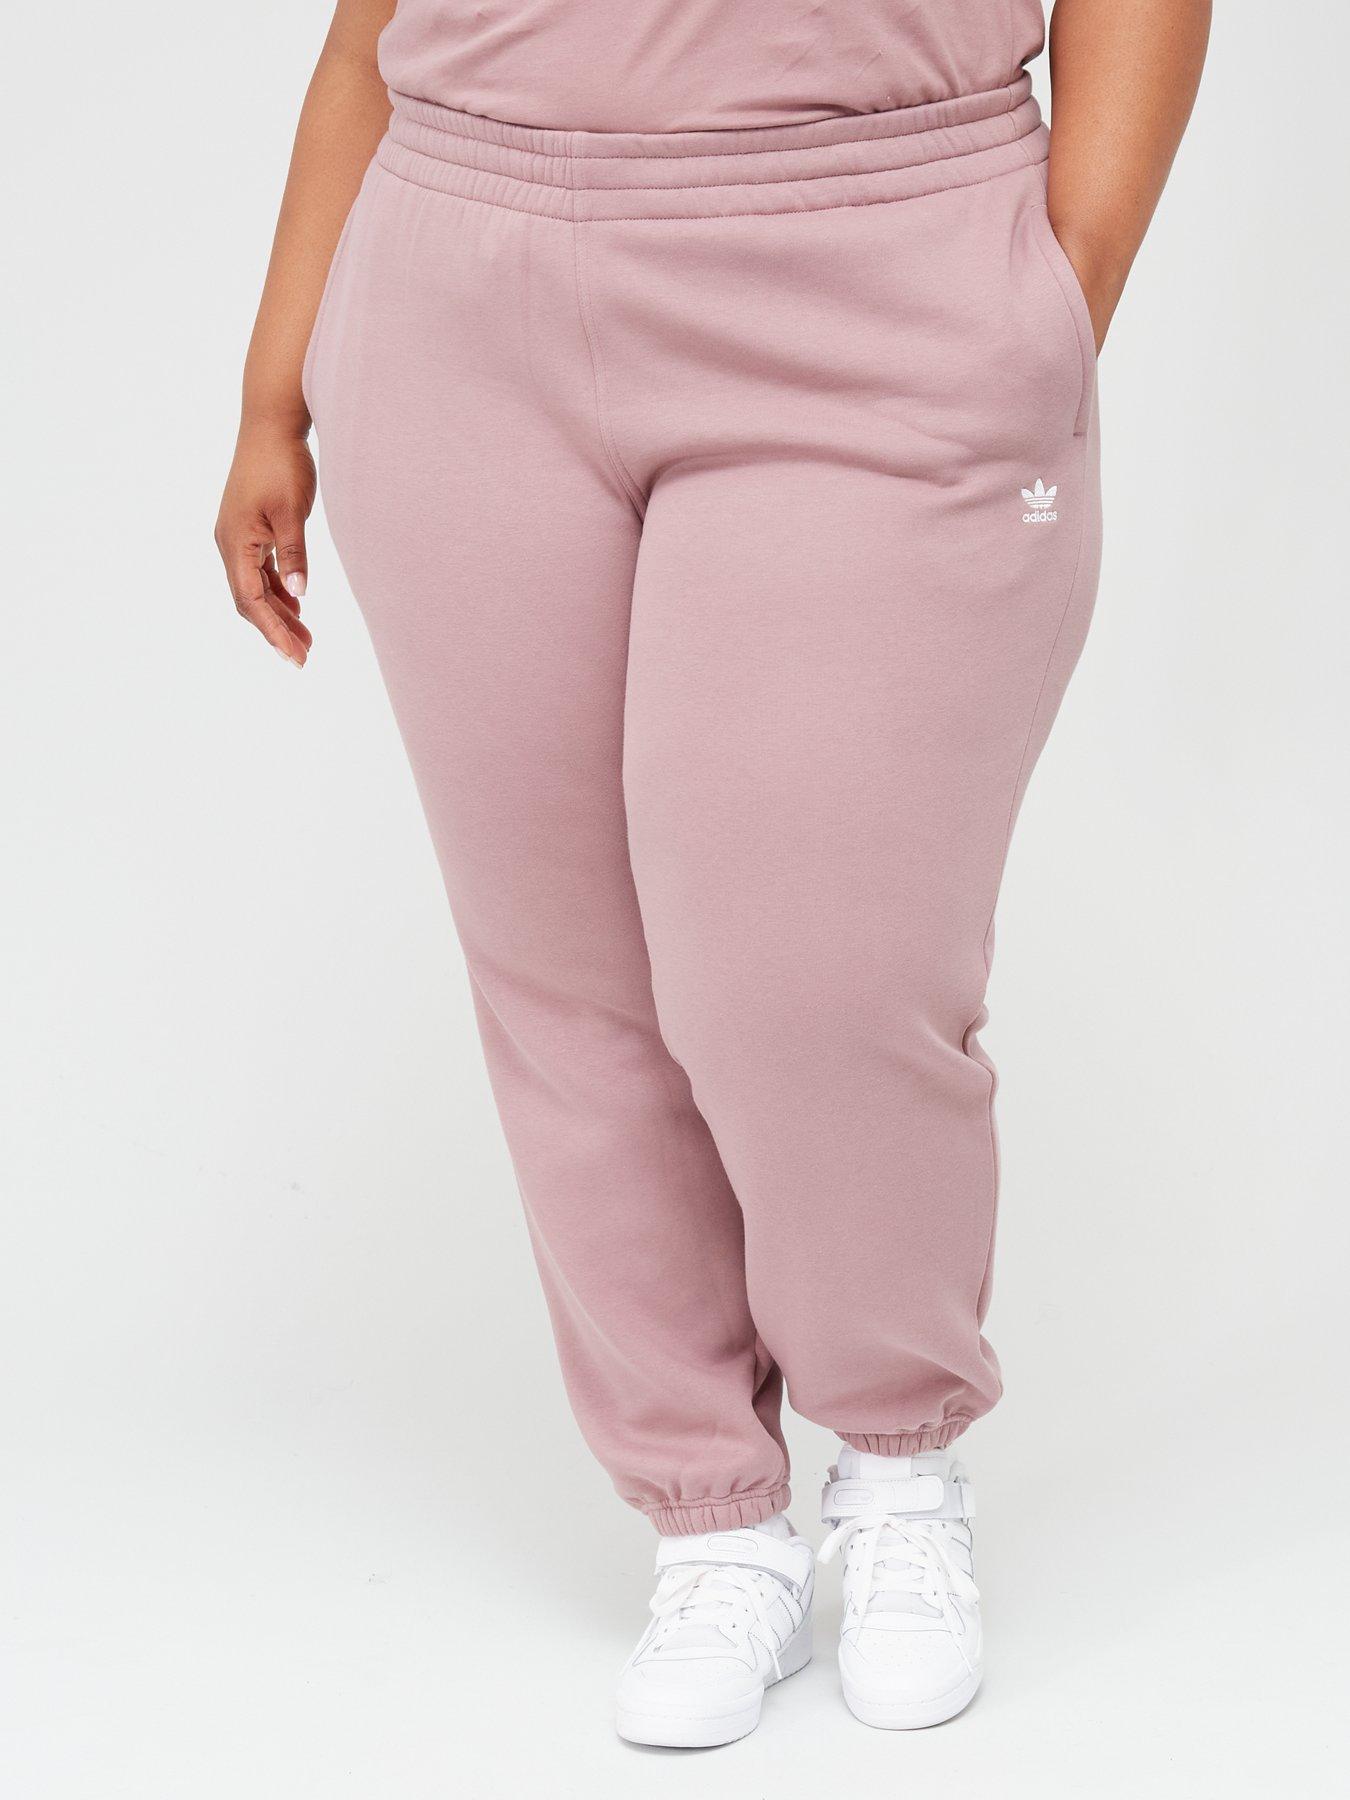 Sweatpants sweat trousers basic joggers pink Girl Gift PLUS Unisex Lounge 6-22 